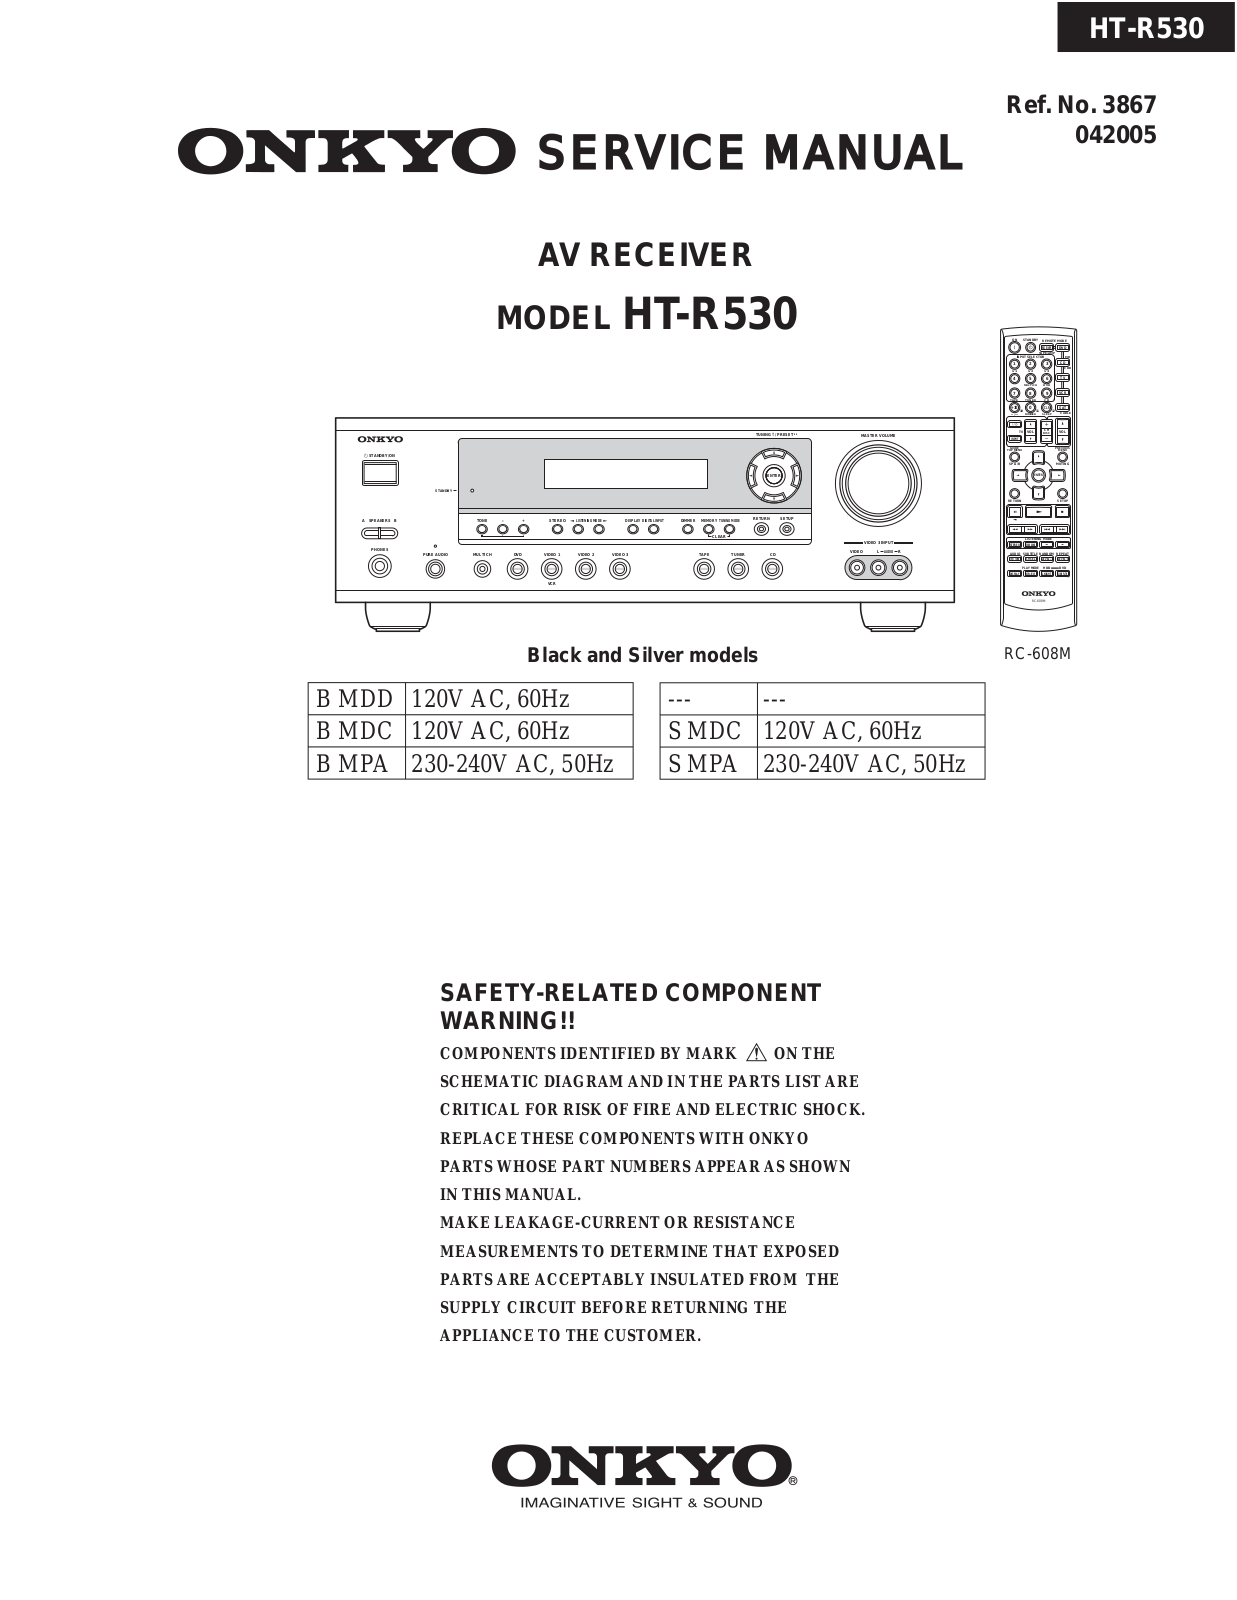 Onkyo HTR-530 Service Manual